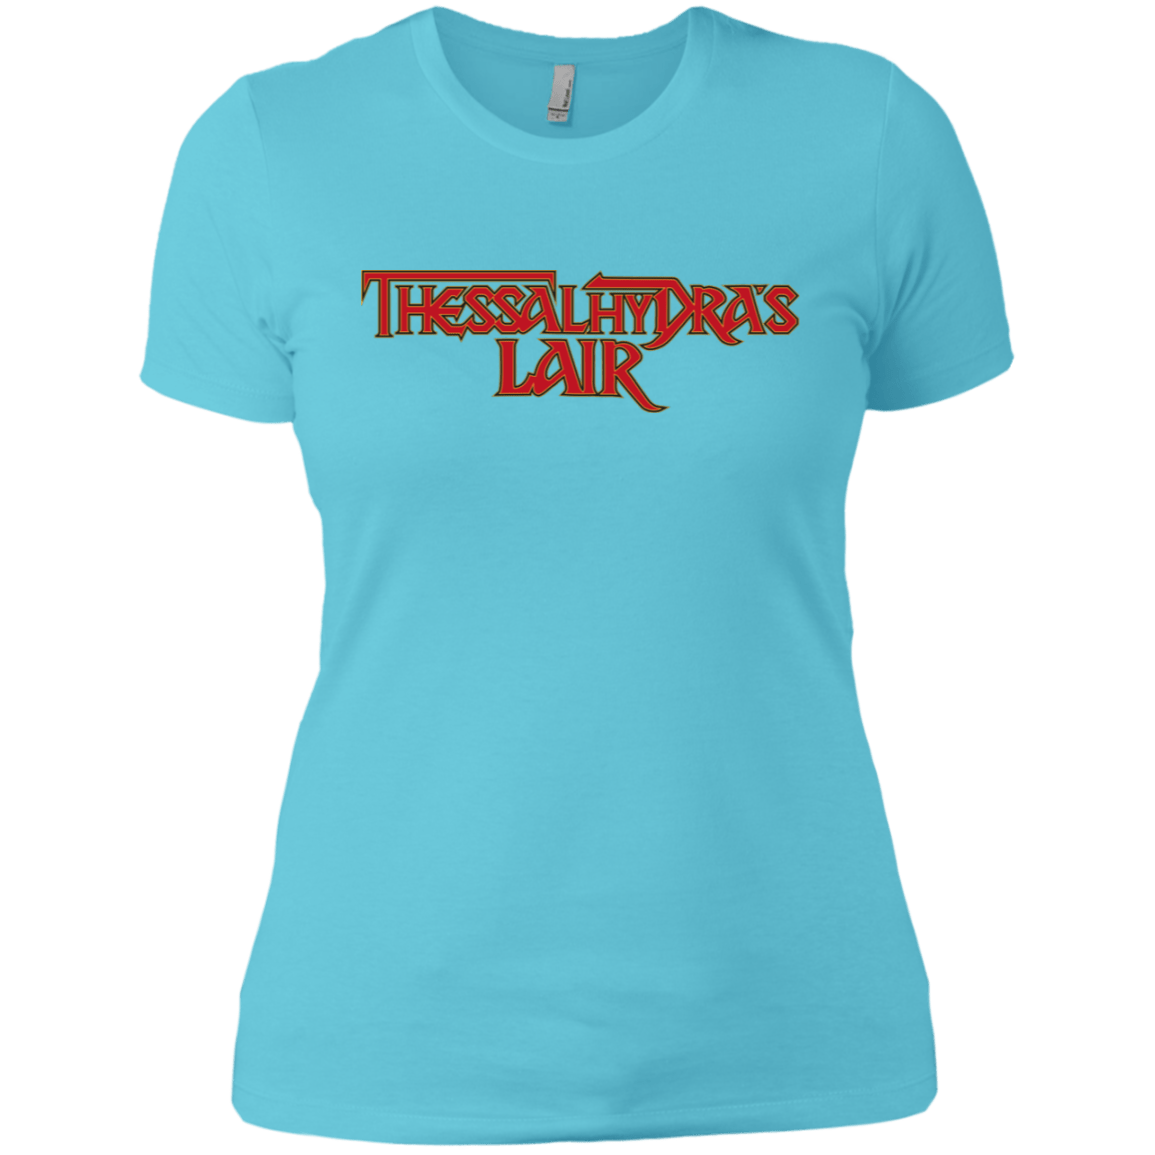 T-Shirts Cancun / X-Small Thessalhydras Lair Women's Premium T-Shirt